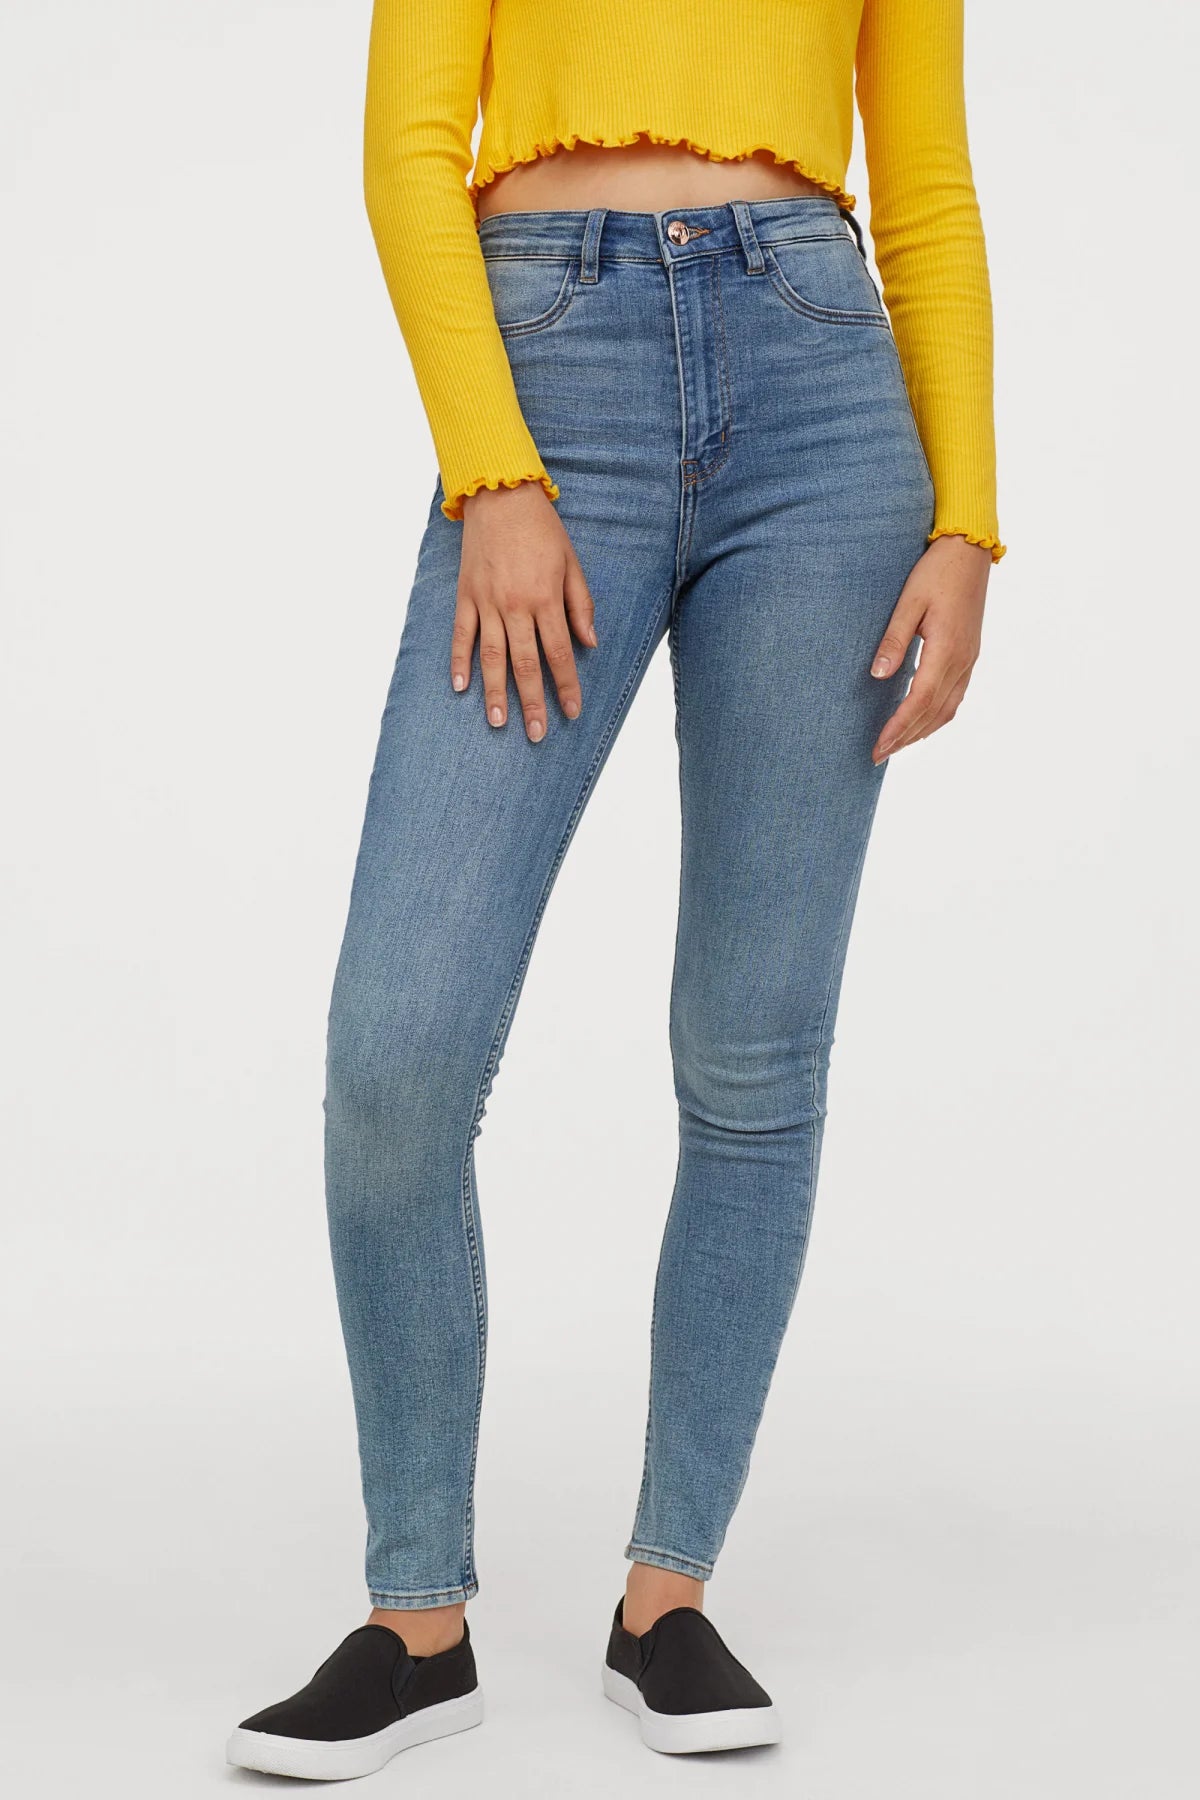 H&M Super Skinny Jeans Pale Blue / 4